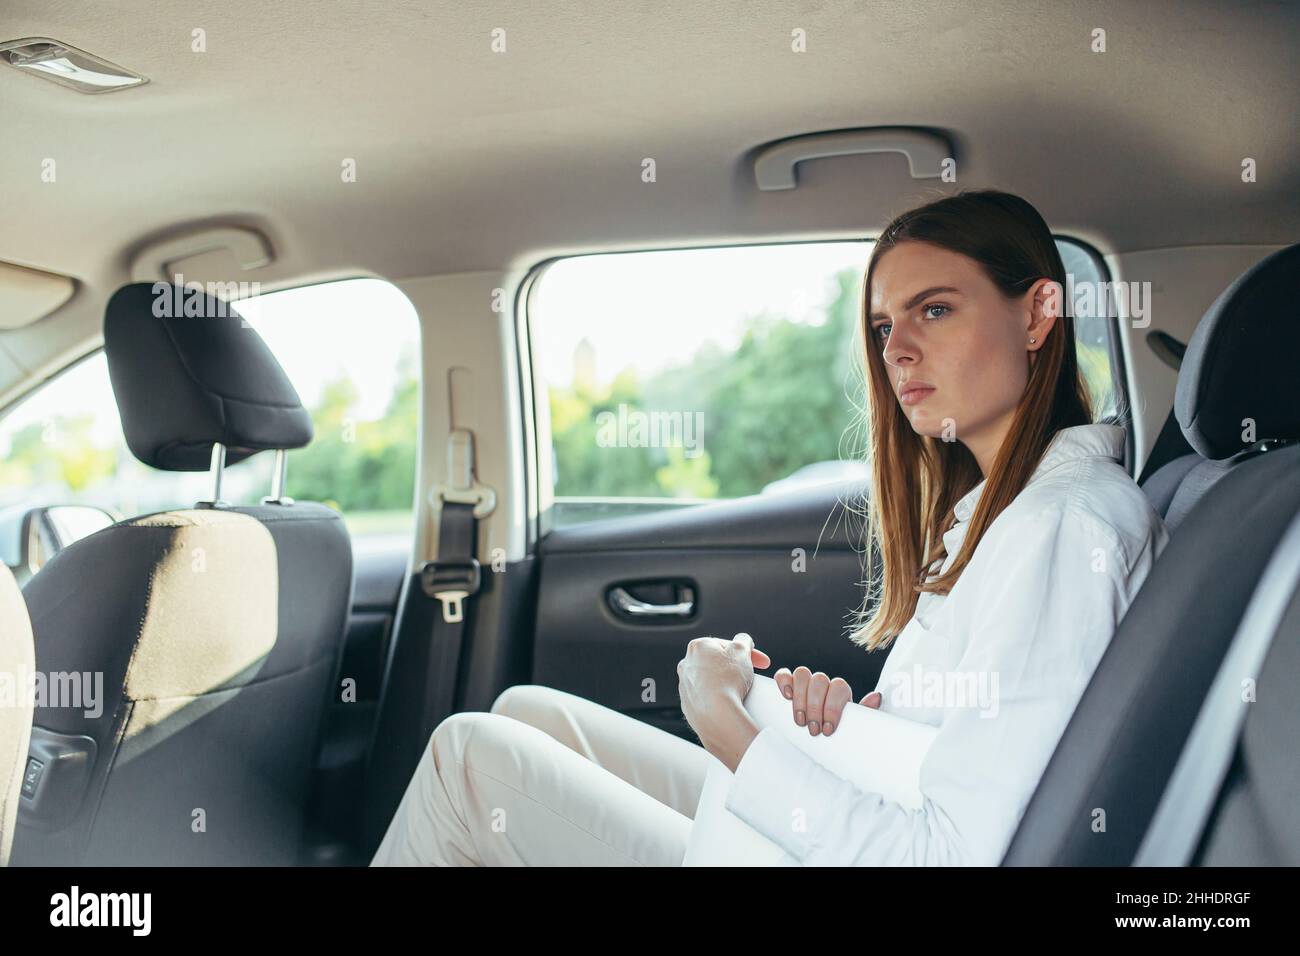 Tired female car passenger holding laptop in hands Stock Photo